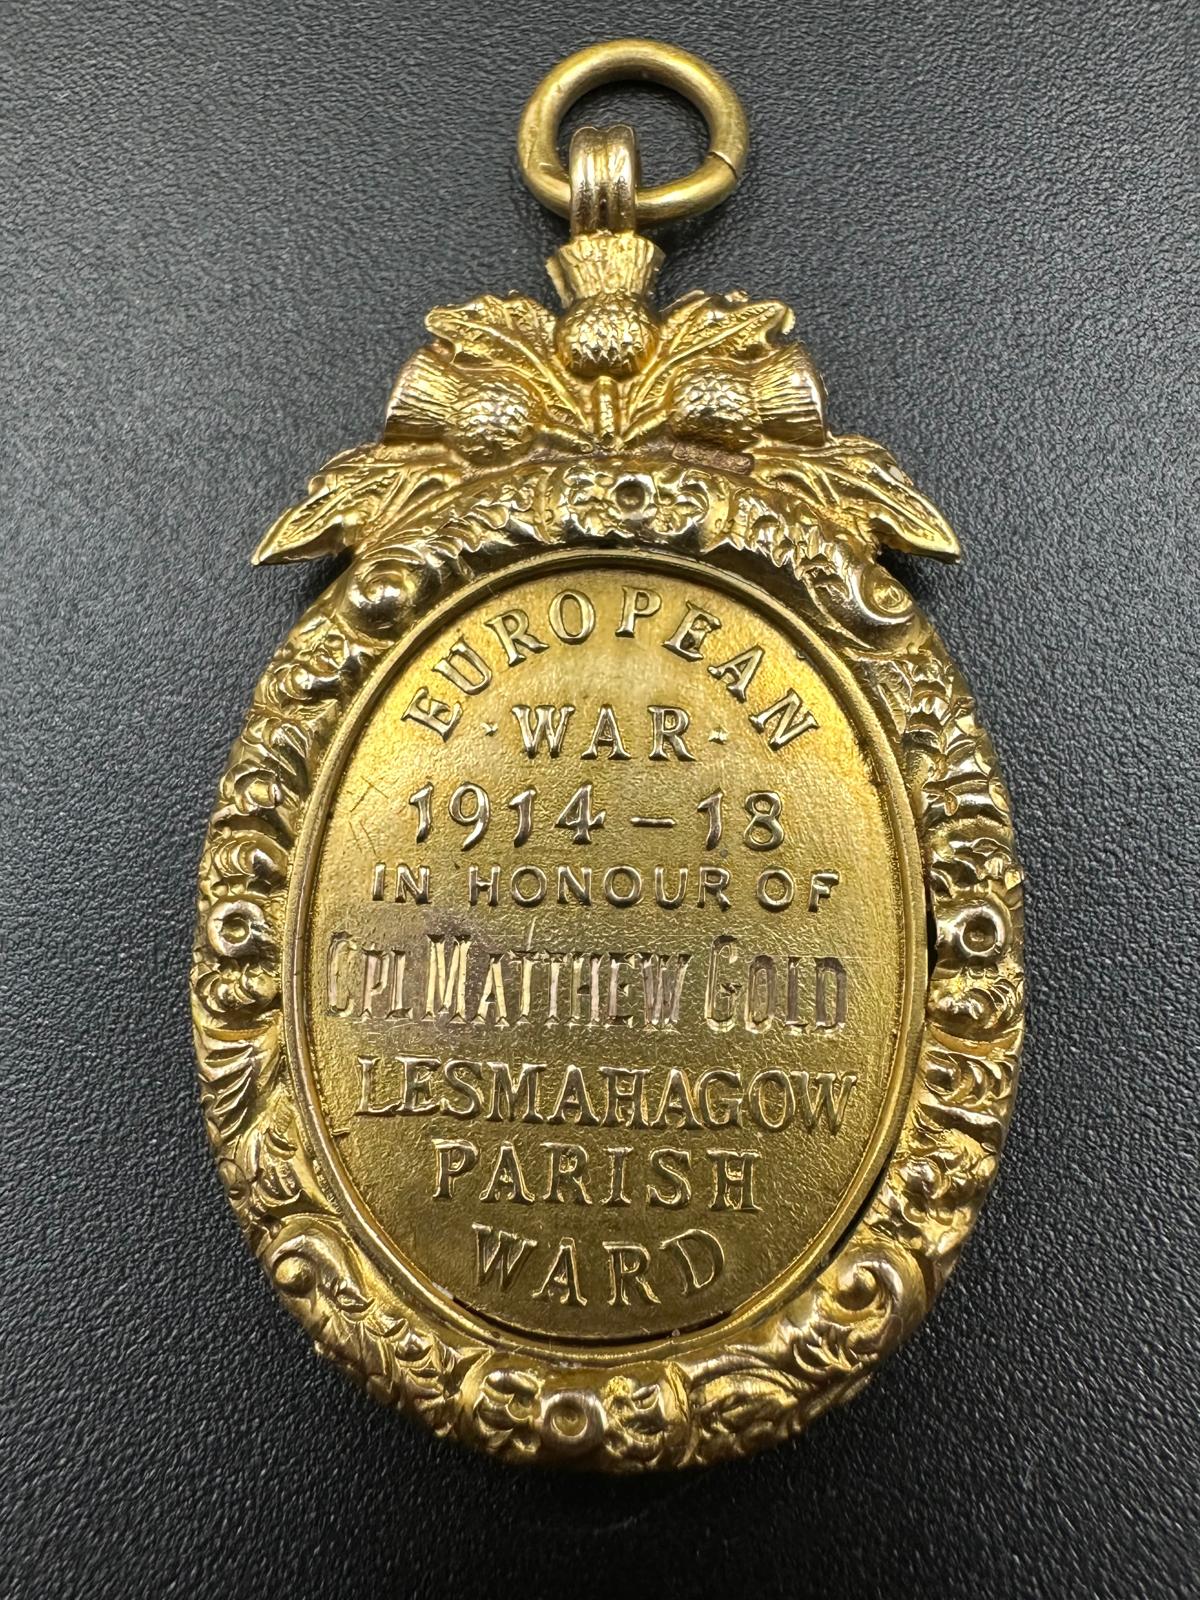 A 9ct gold European War 1914-18 medallion, cast to honour Cpl Matthew Gold of Lesmahagow Parish Ward - Image 2 of 7